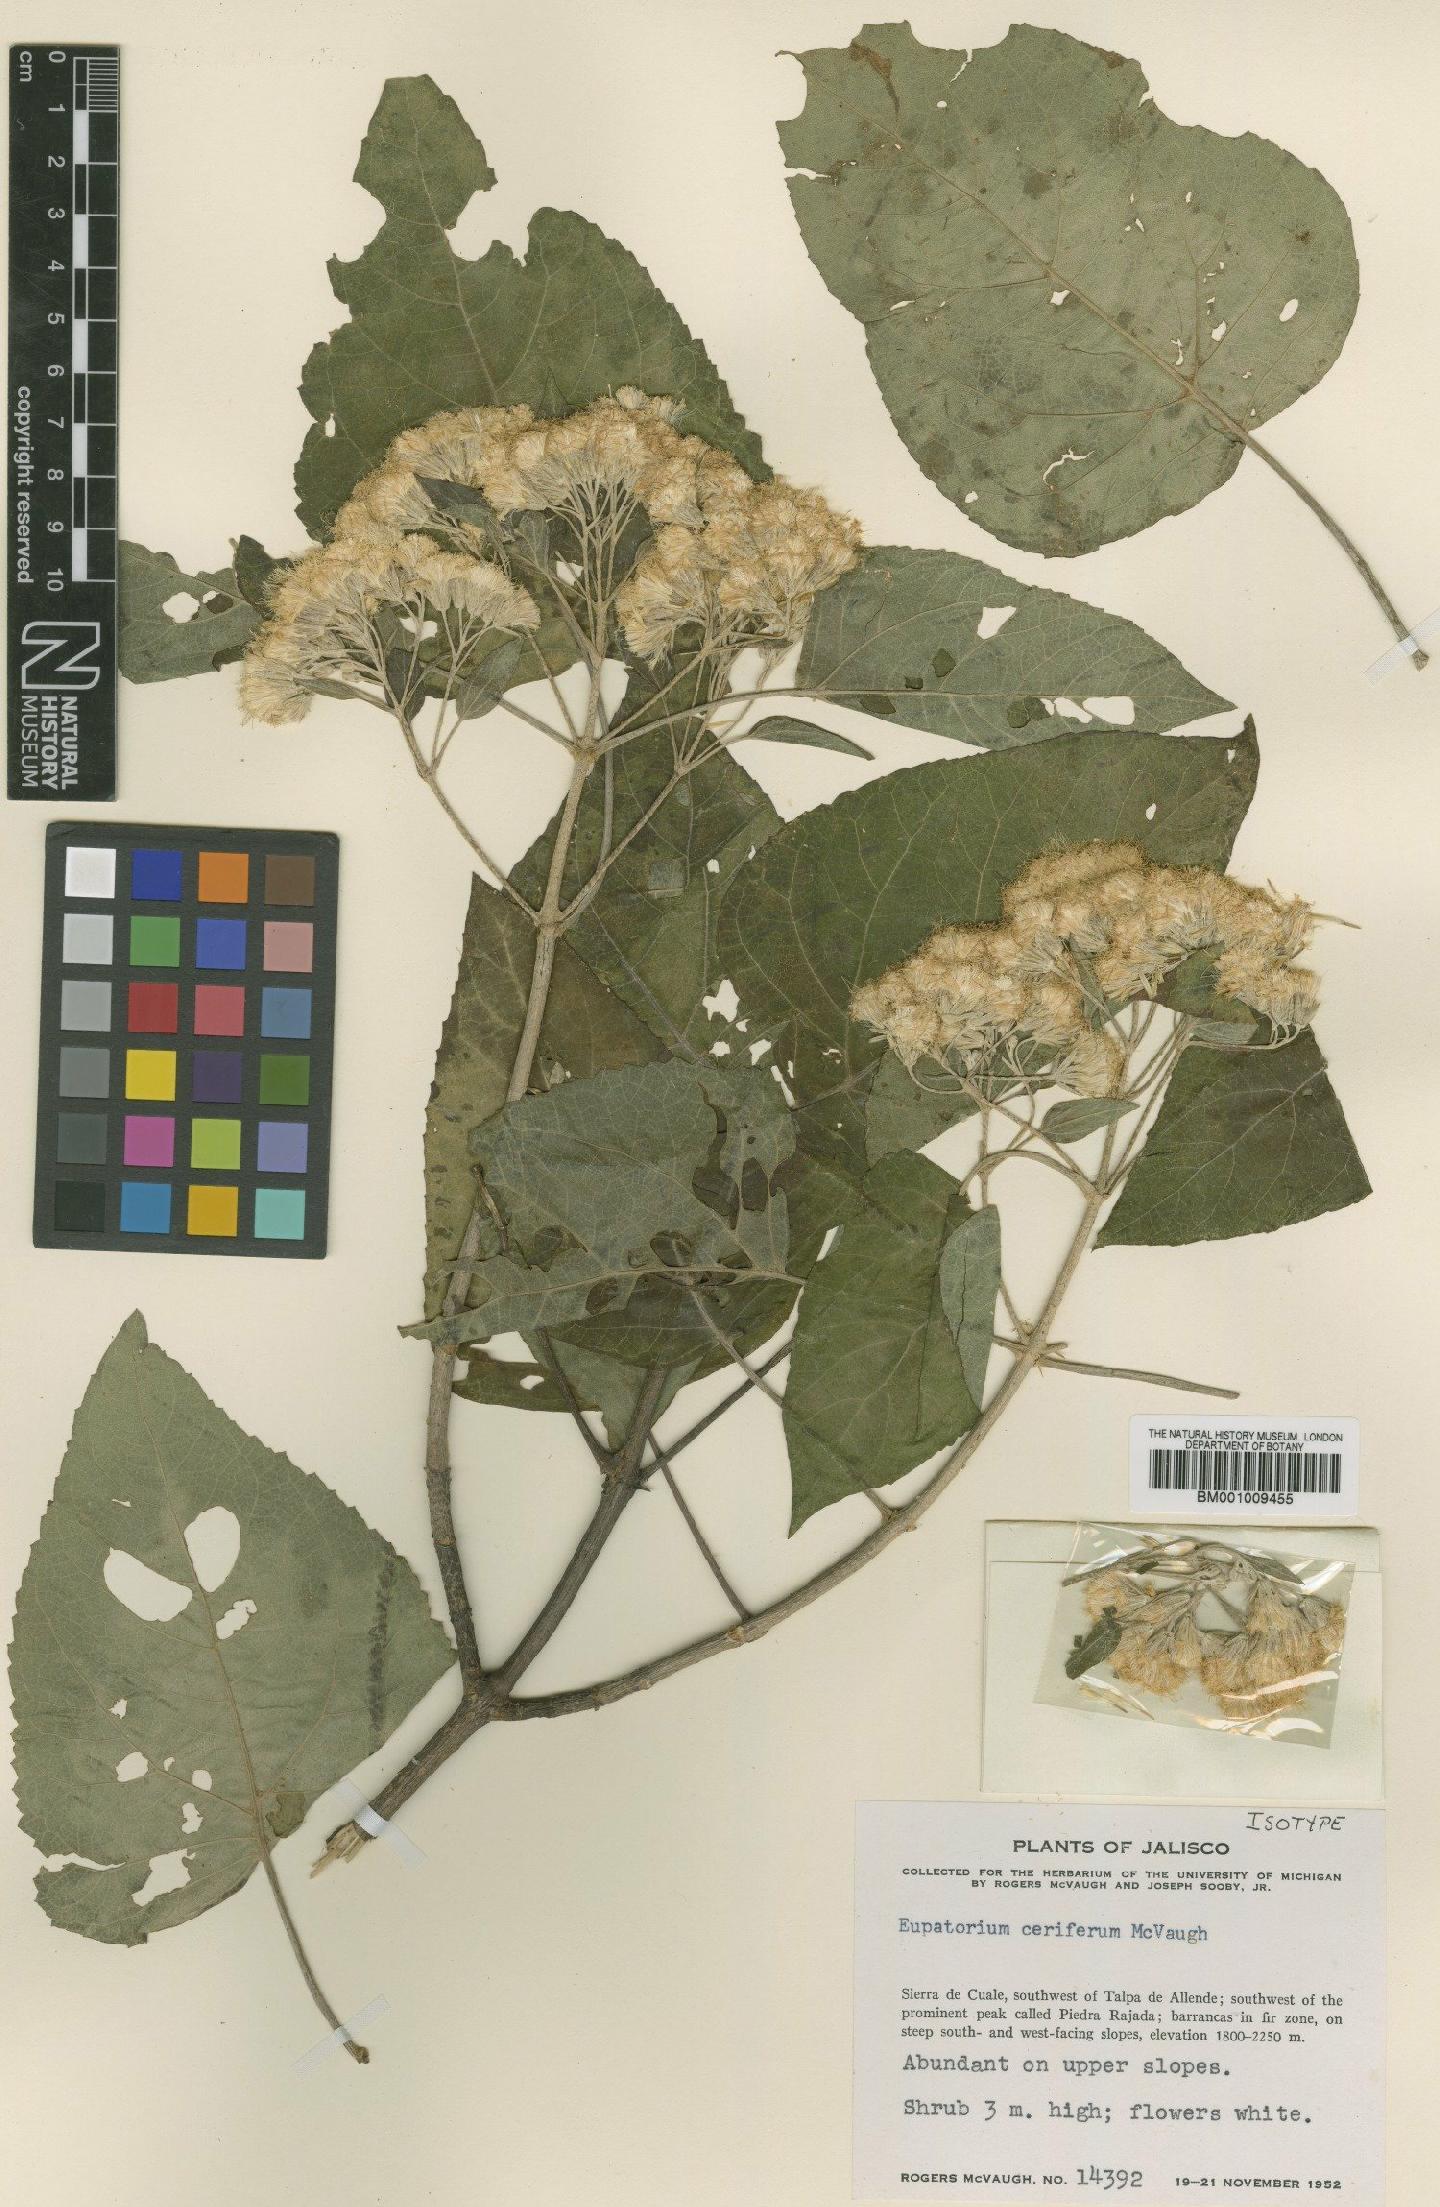 To NHMUK collection (Ageratina cerifera (McVaugh) R.M.King & H.Rob.; Isotype; NHMUK:ecatalogue:610800)